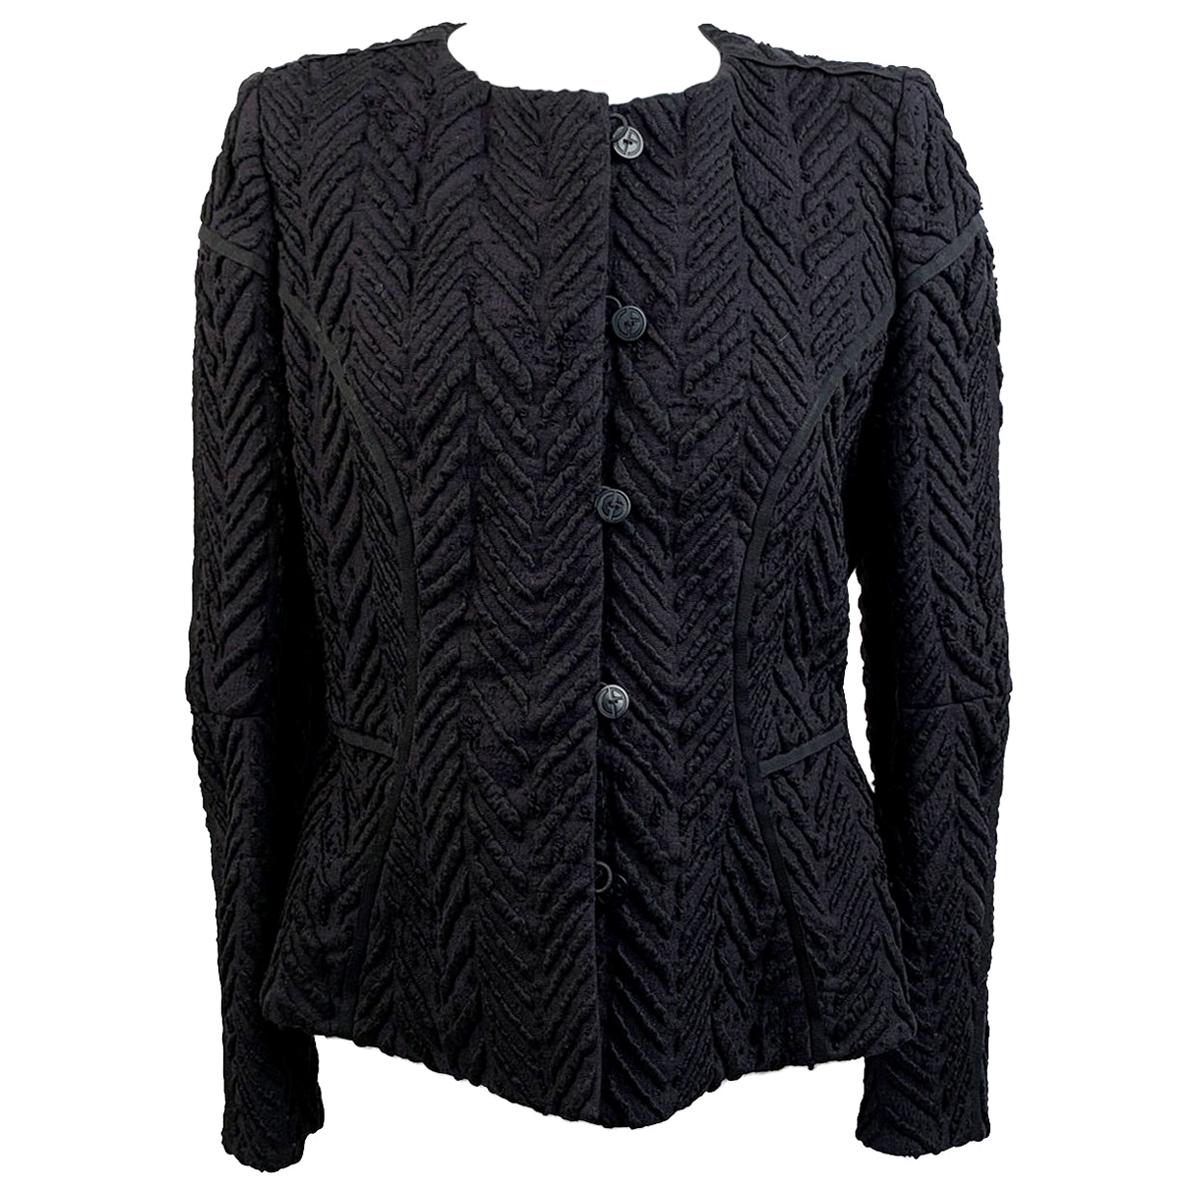 Giorgio Armani Black Label Vintage Textured Wool Blazer Jacket Size 46